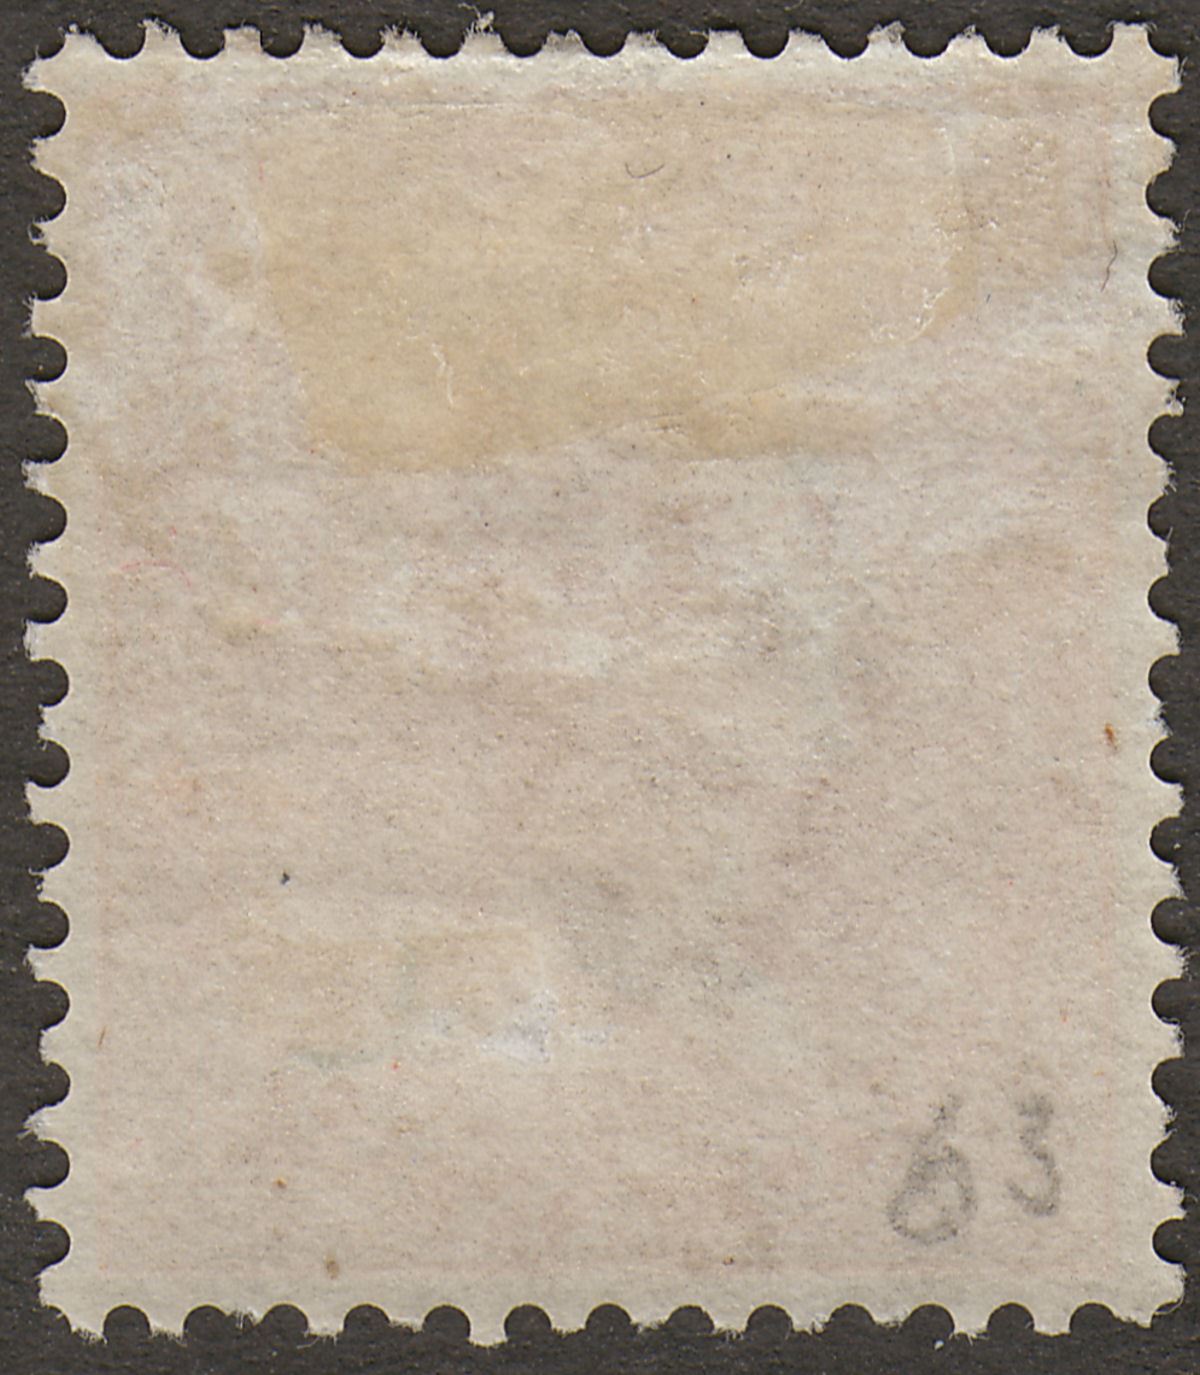 India 1865 QV 2a Orange Mint SG62 cat £150 wmk Elephant Head